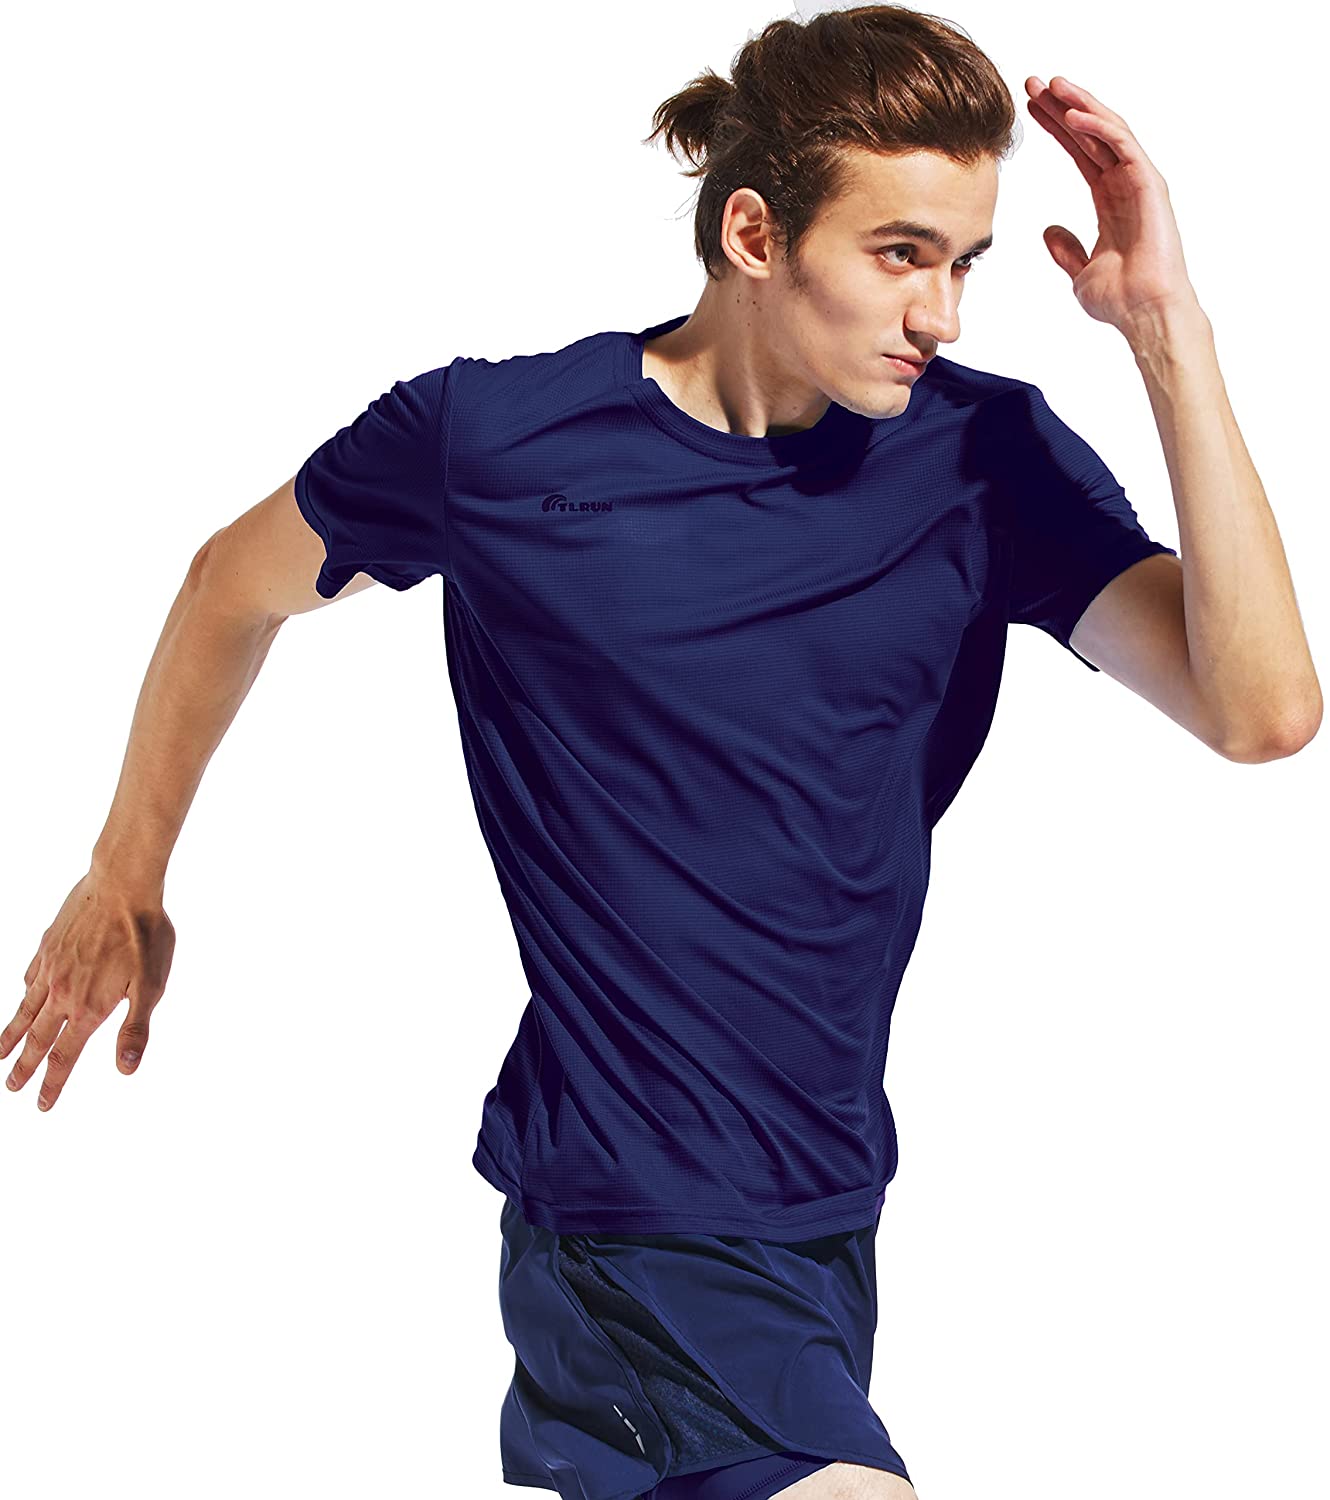 TLRUN Men's Ultra Lightweight Running Shirts Cool Short Sleeve Athletic T-Shirts Dry Fit Marathon Top Tee 